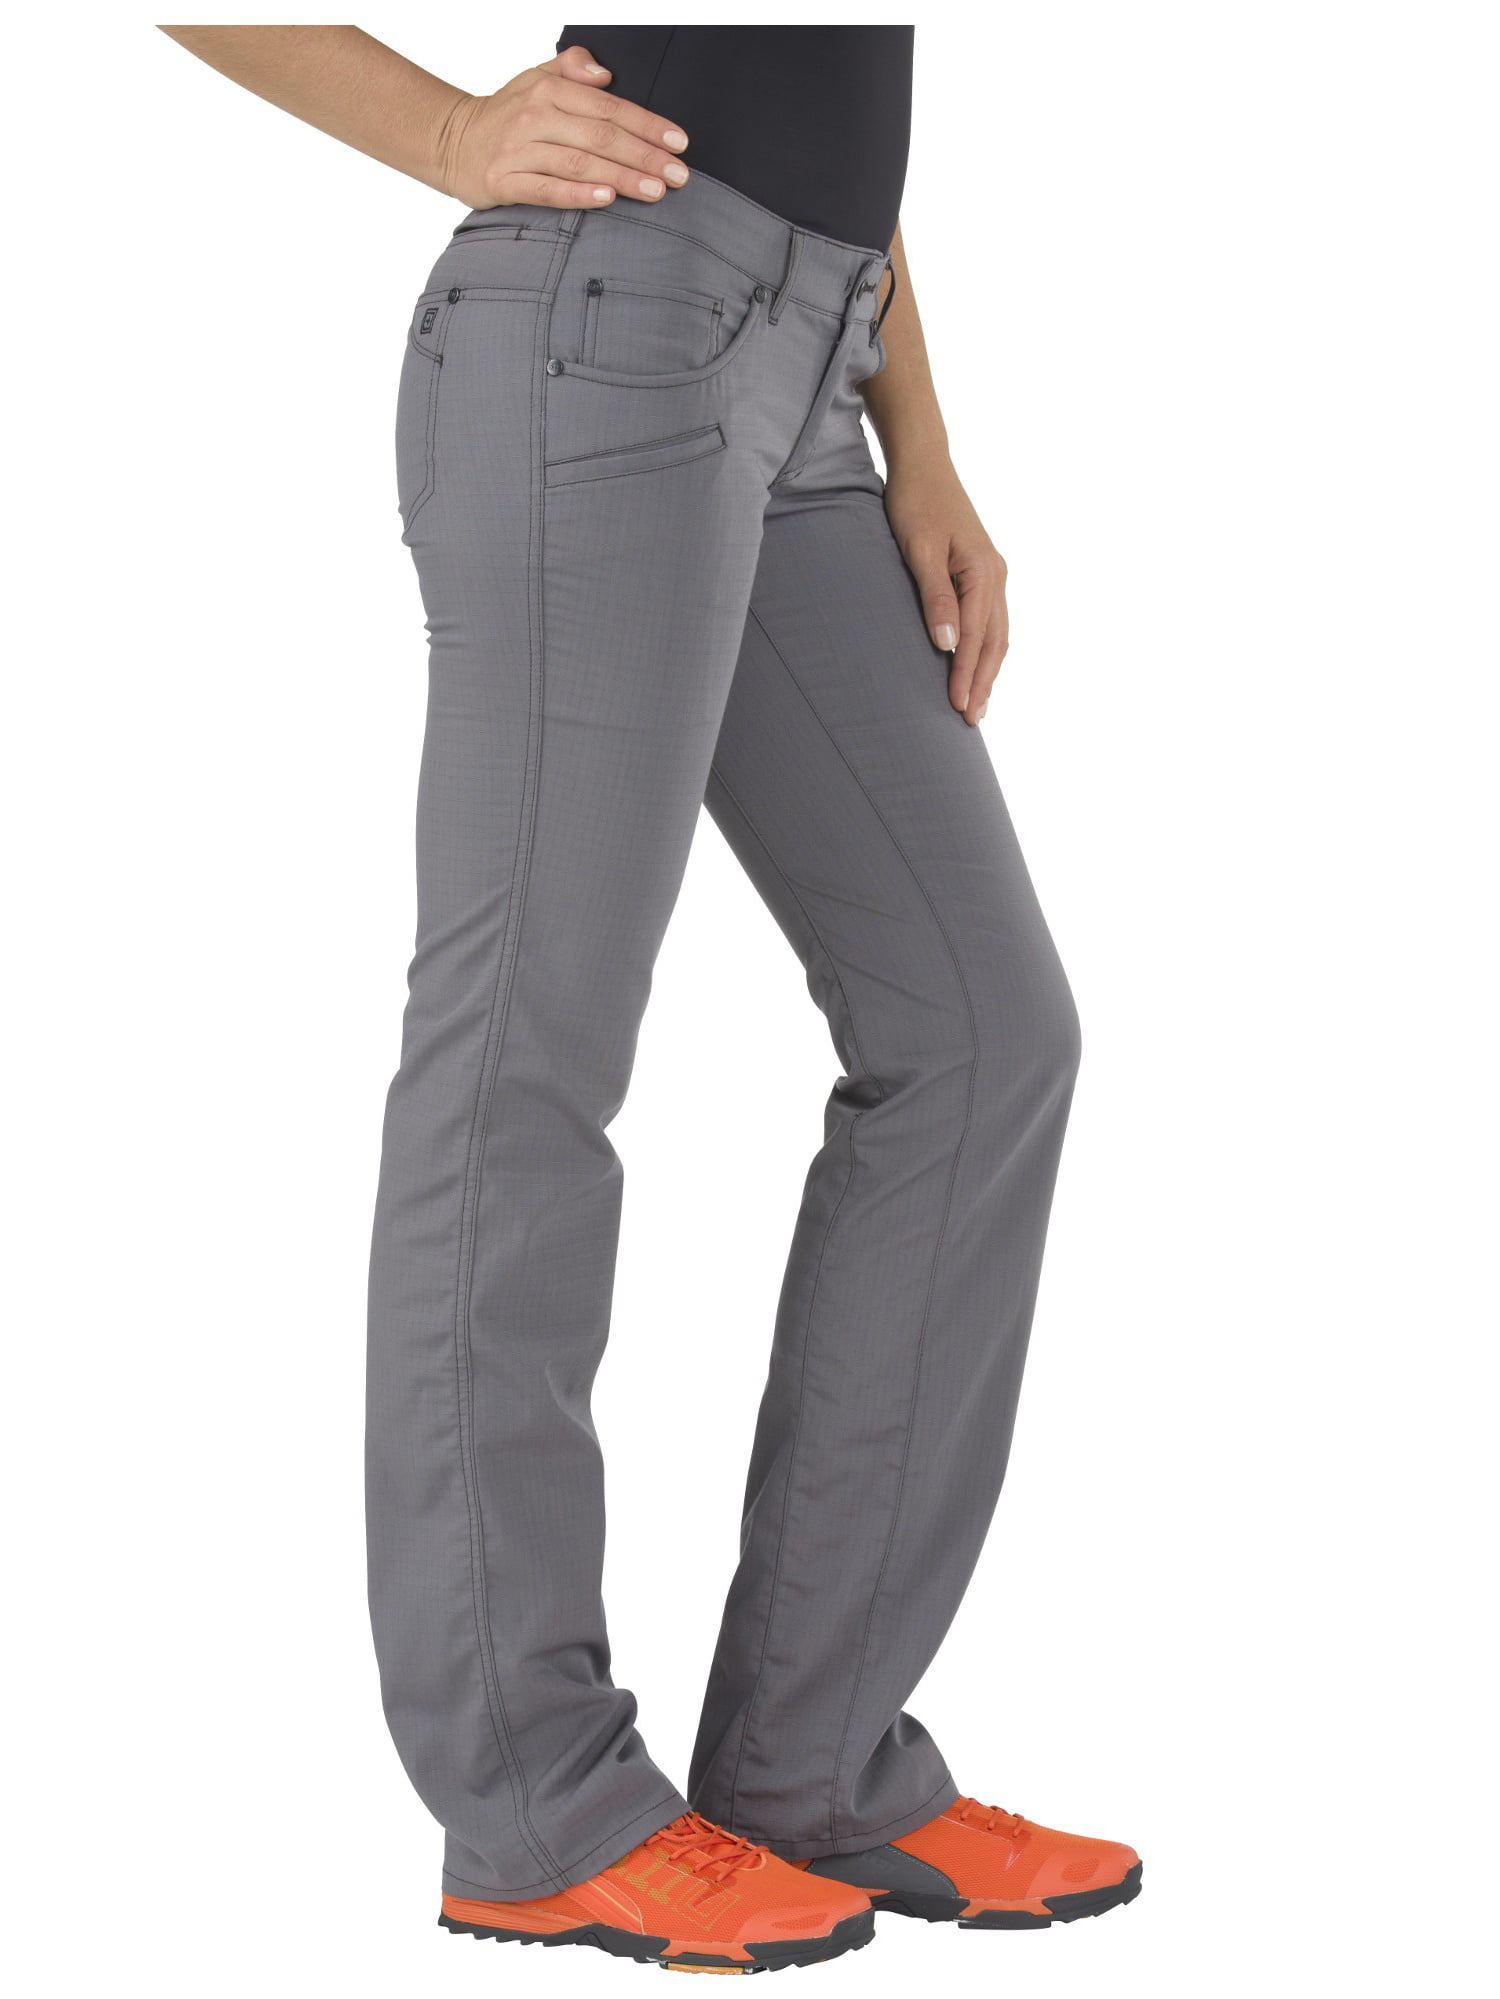 Womens Tactical Pants  Comfort  Durability